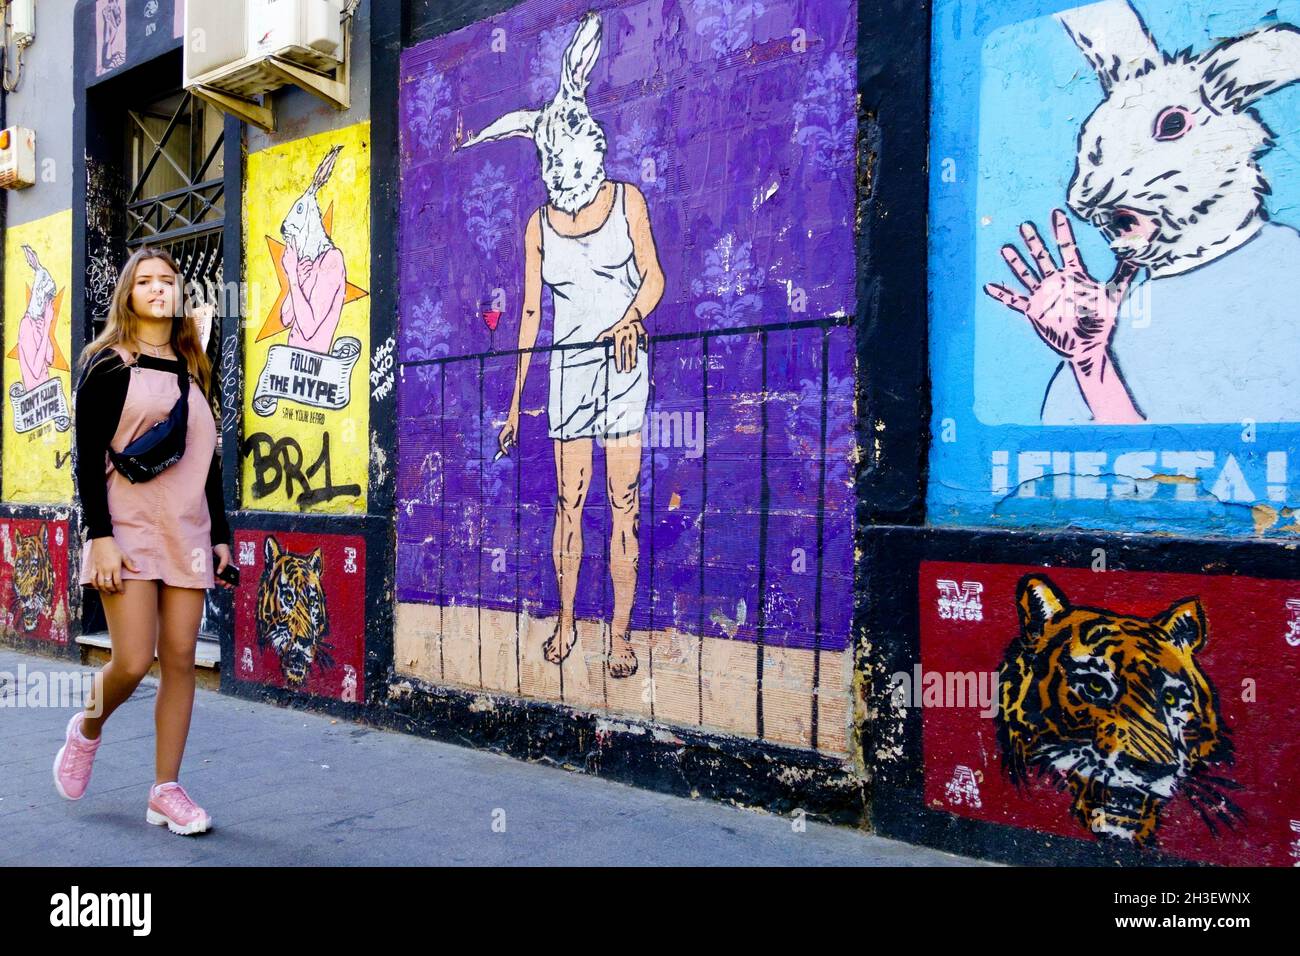 Ruzafa Valencia girl passing along graffiti wall, mural street art Spain rabbit street city Stock Photo